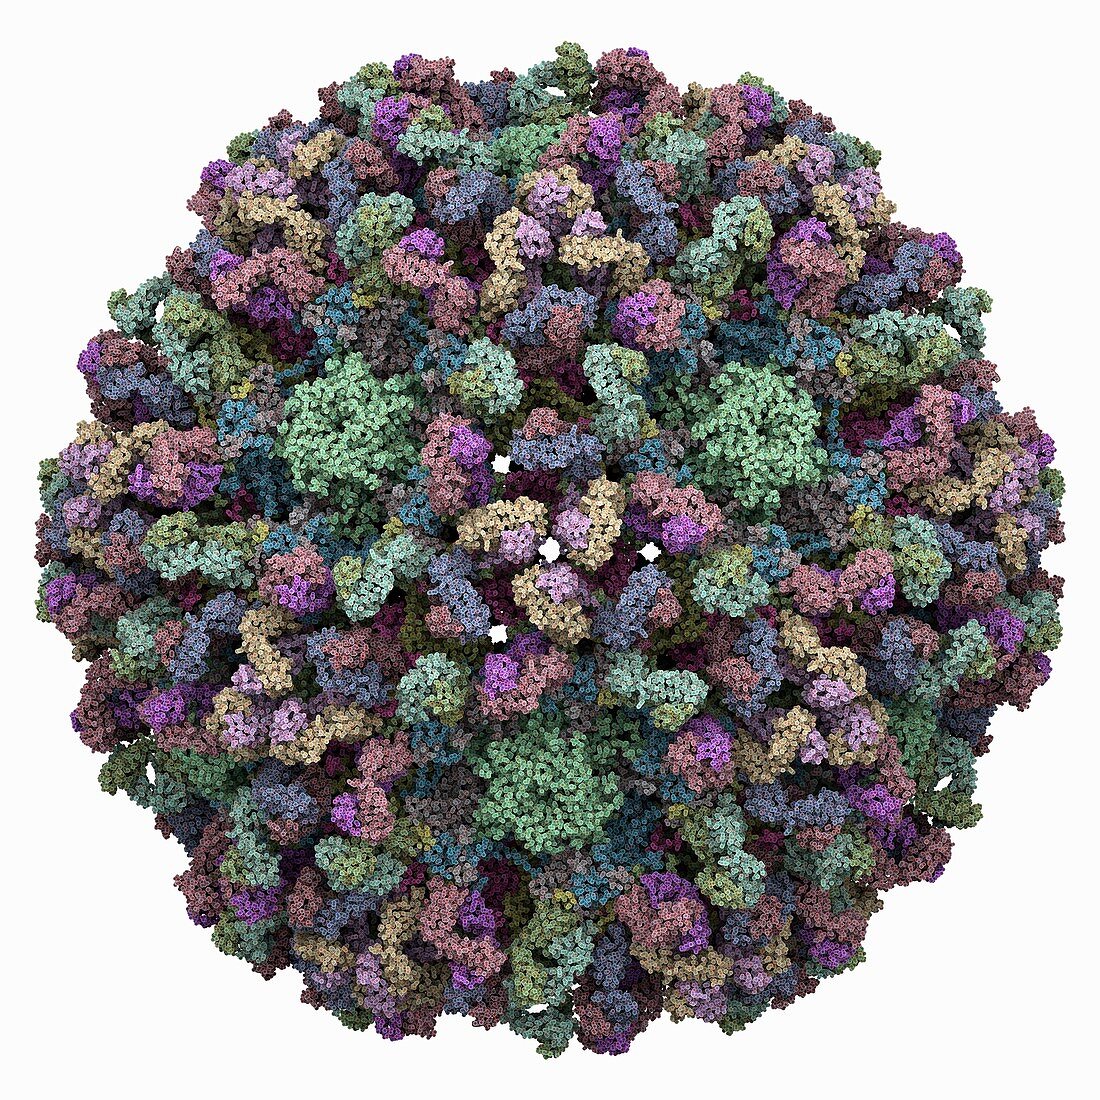 Human papillomavirus 16 capsid, molecular model